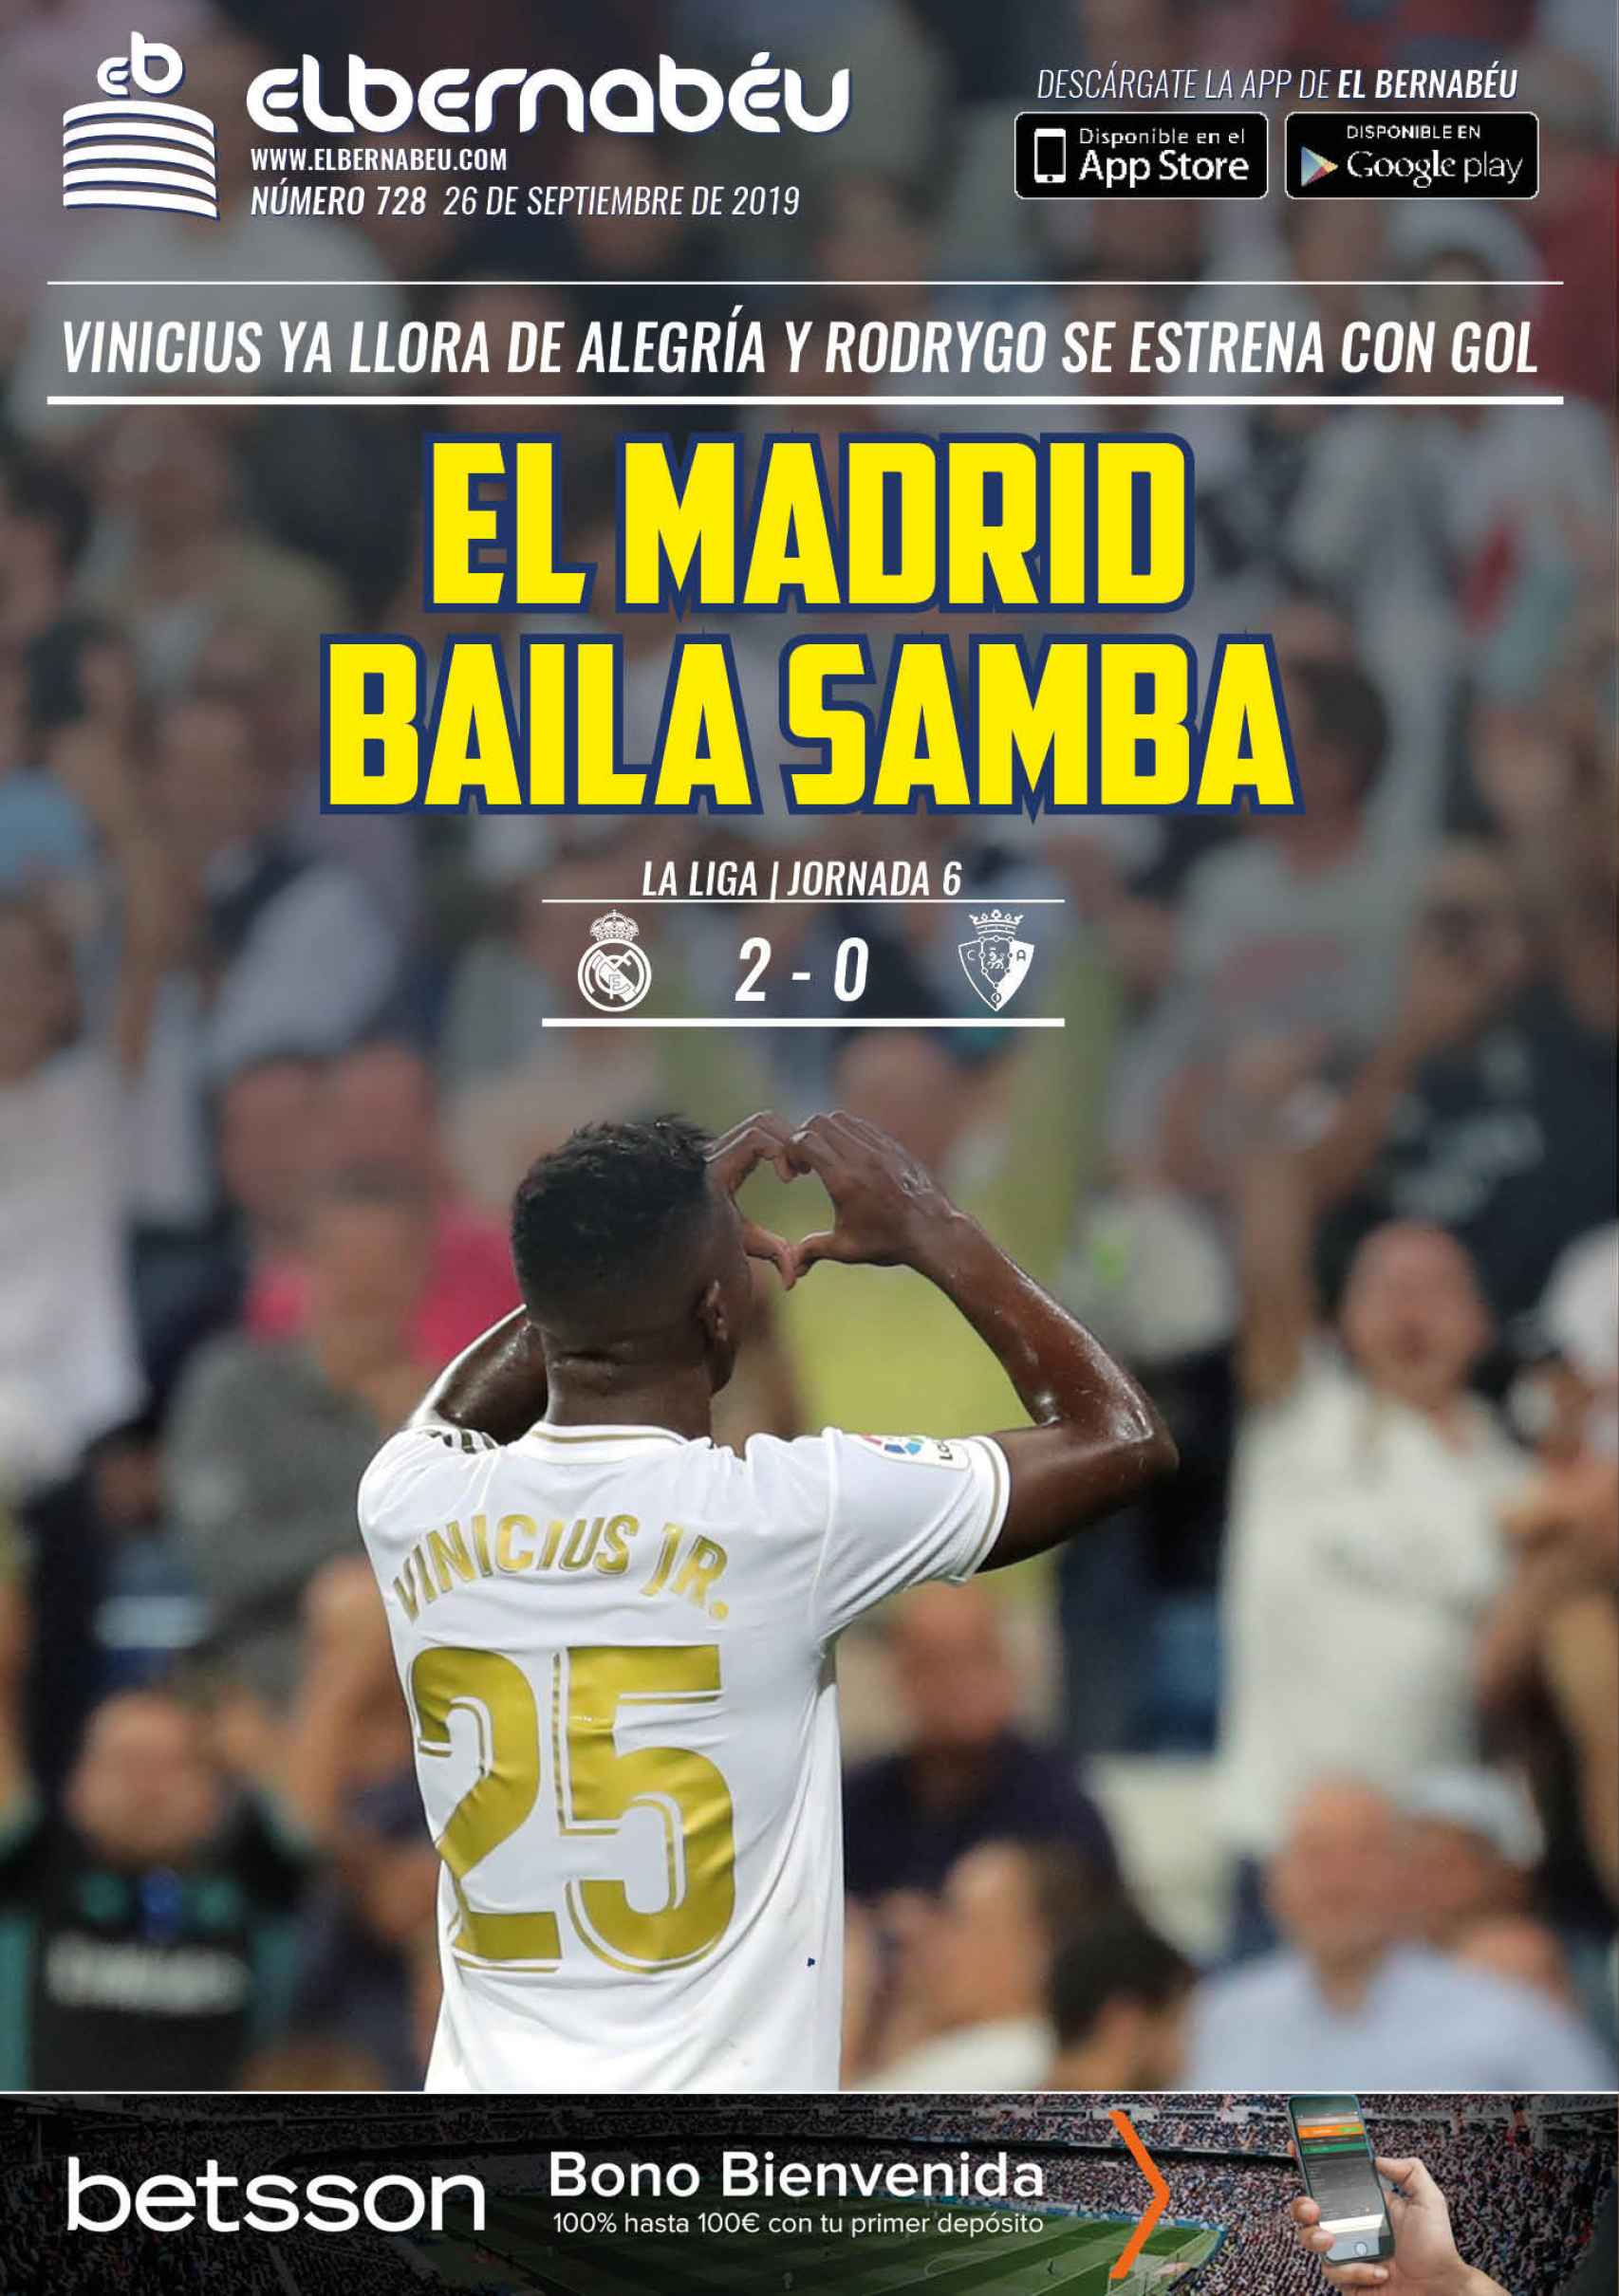 La portada de El Bernabéu (26/09/2019)